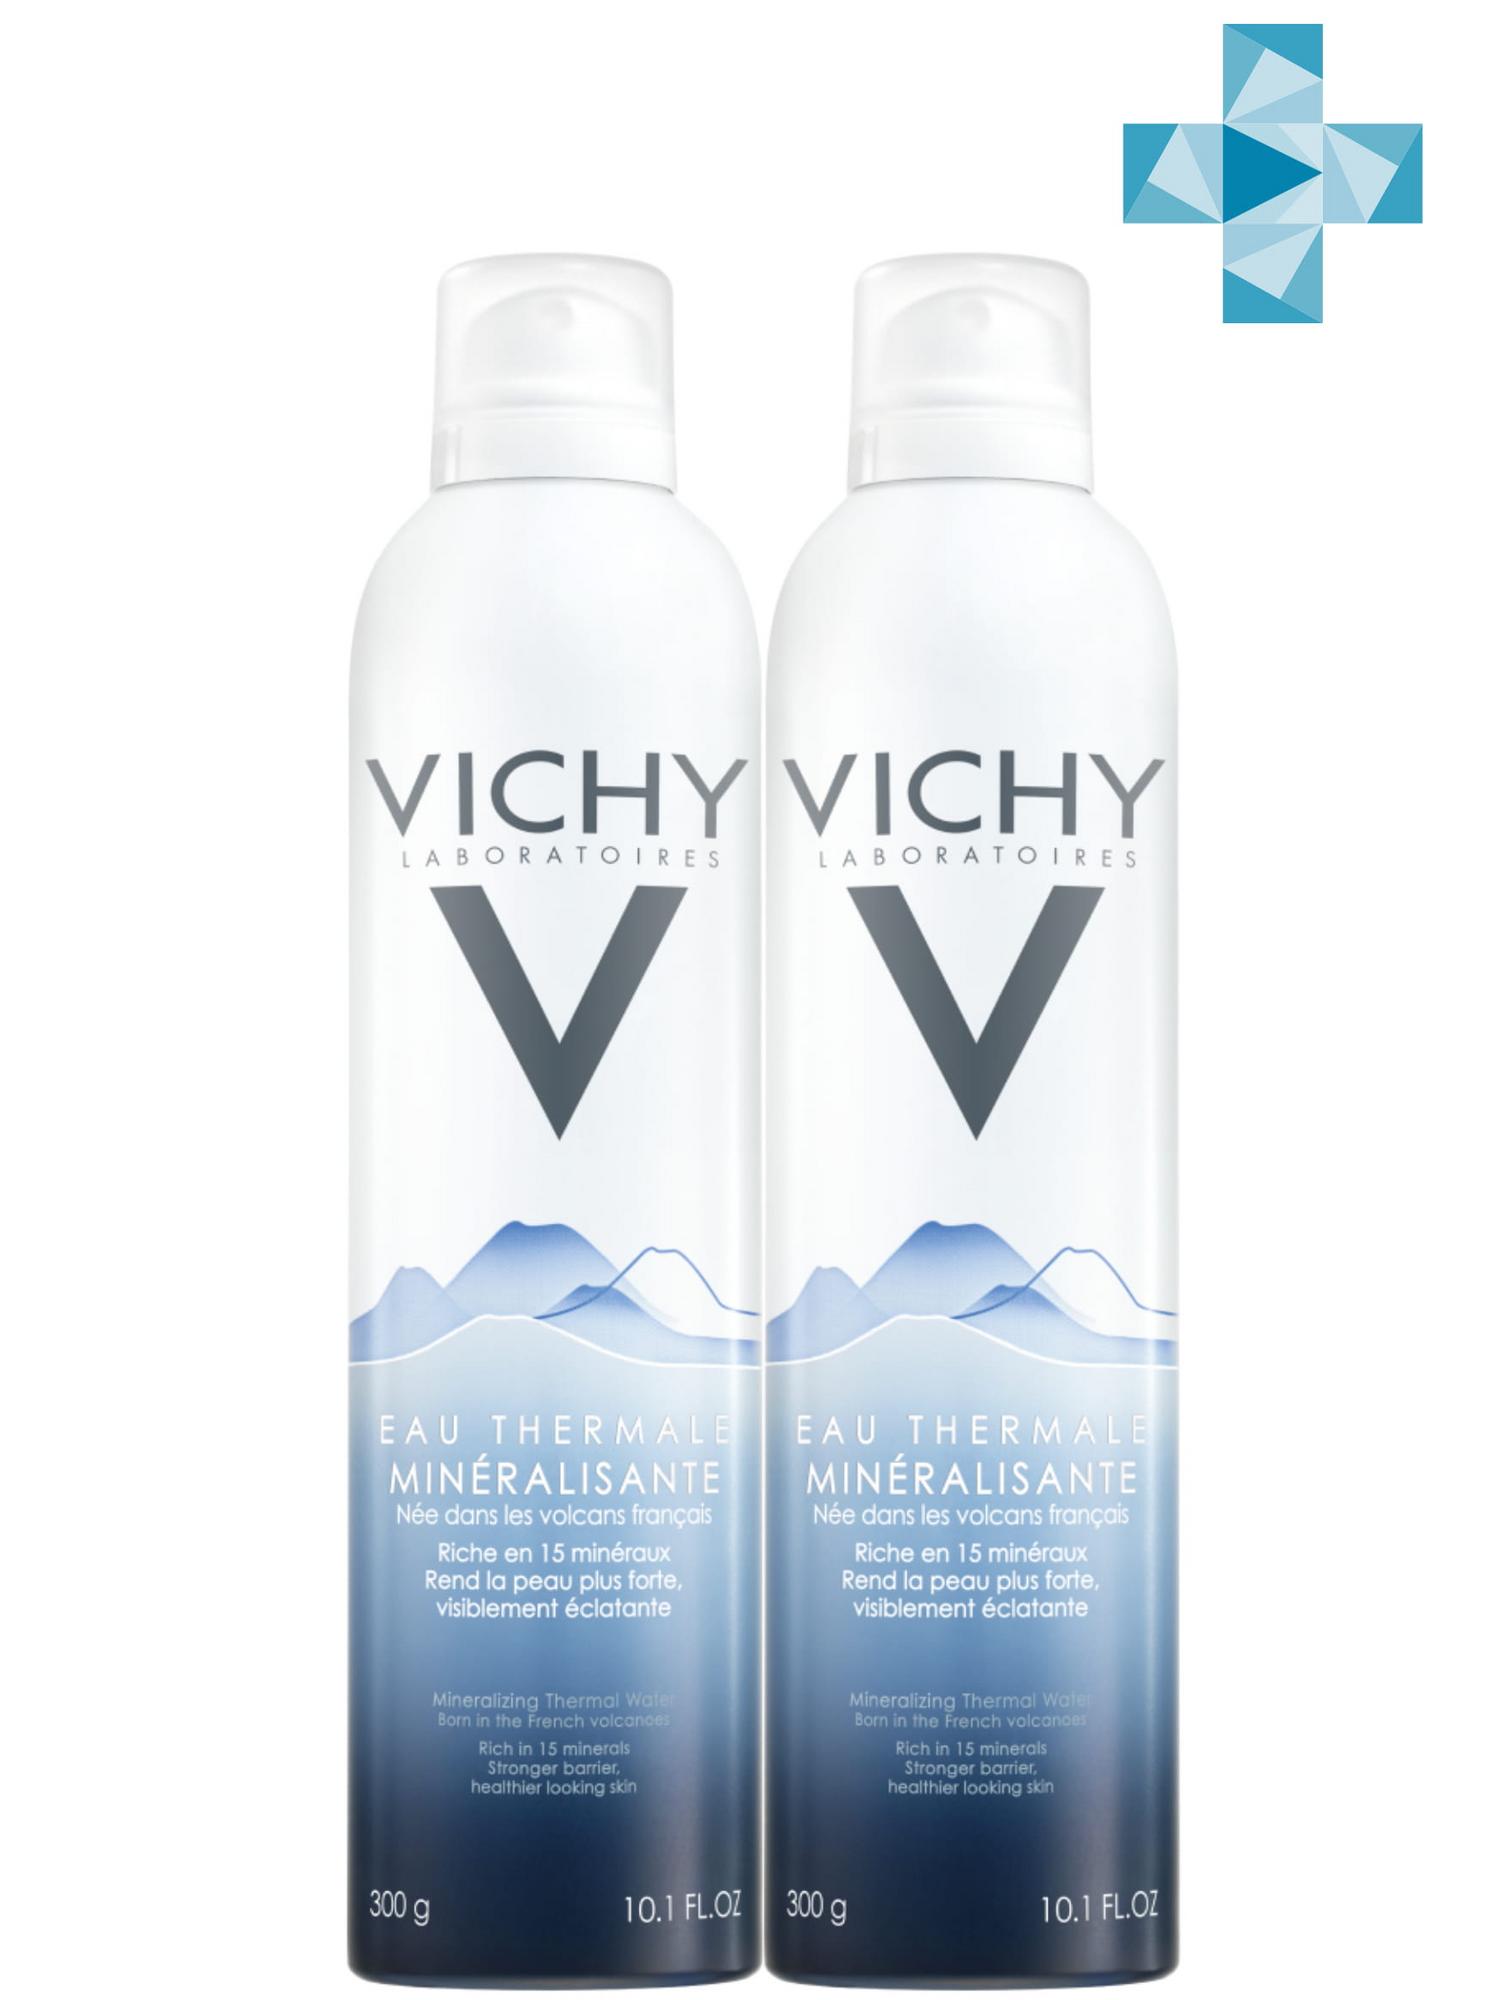 Vichy Комплект Термальная Вода Vichy, 2 шт. по 300 мл (Vichy